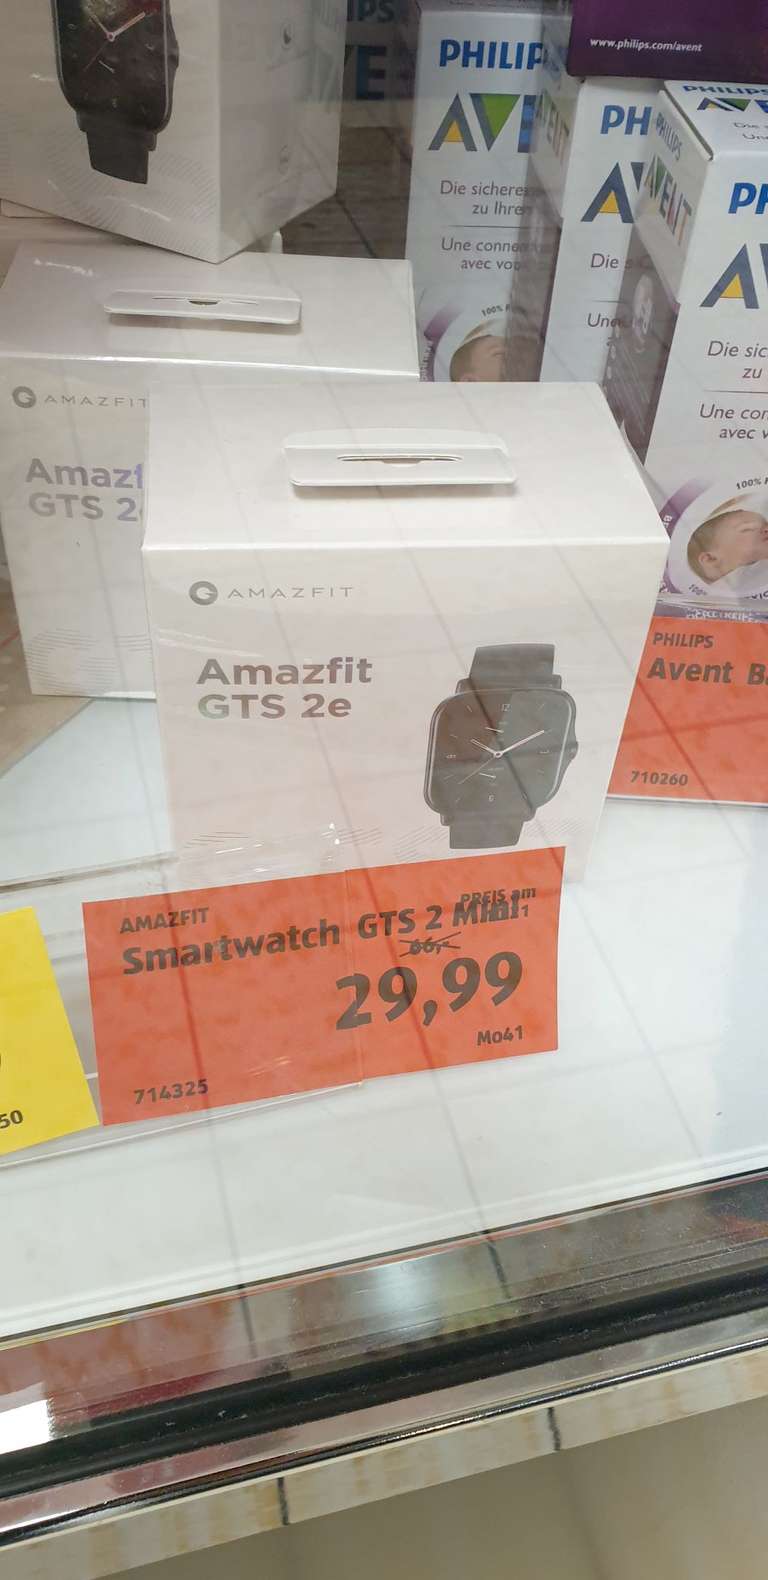 LOKAL Amazfit GTS2 Mini für 29,99€ im Aldi Süd Heldenbergenerstr. 1 in Hanau